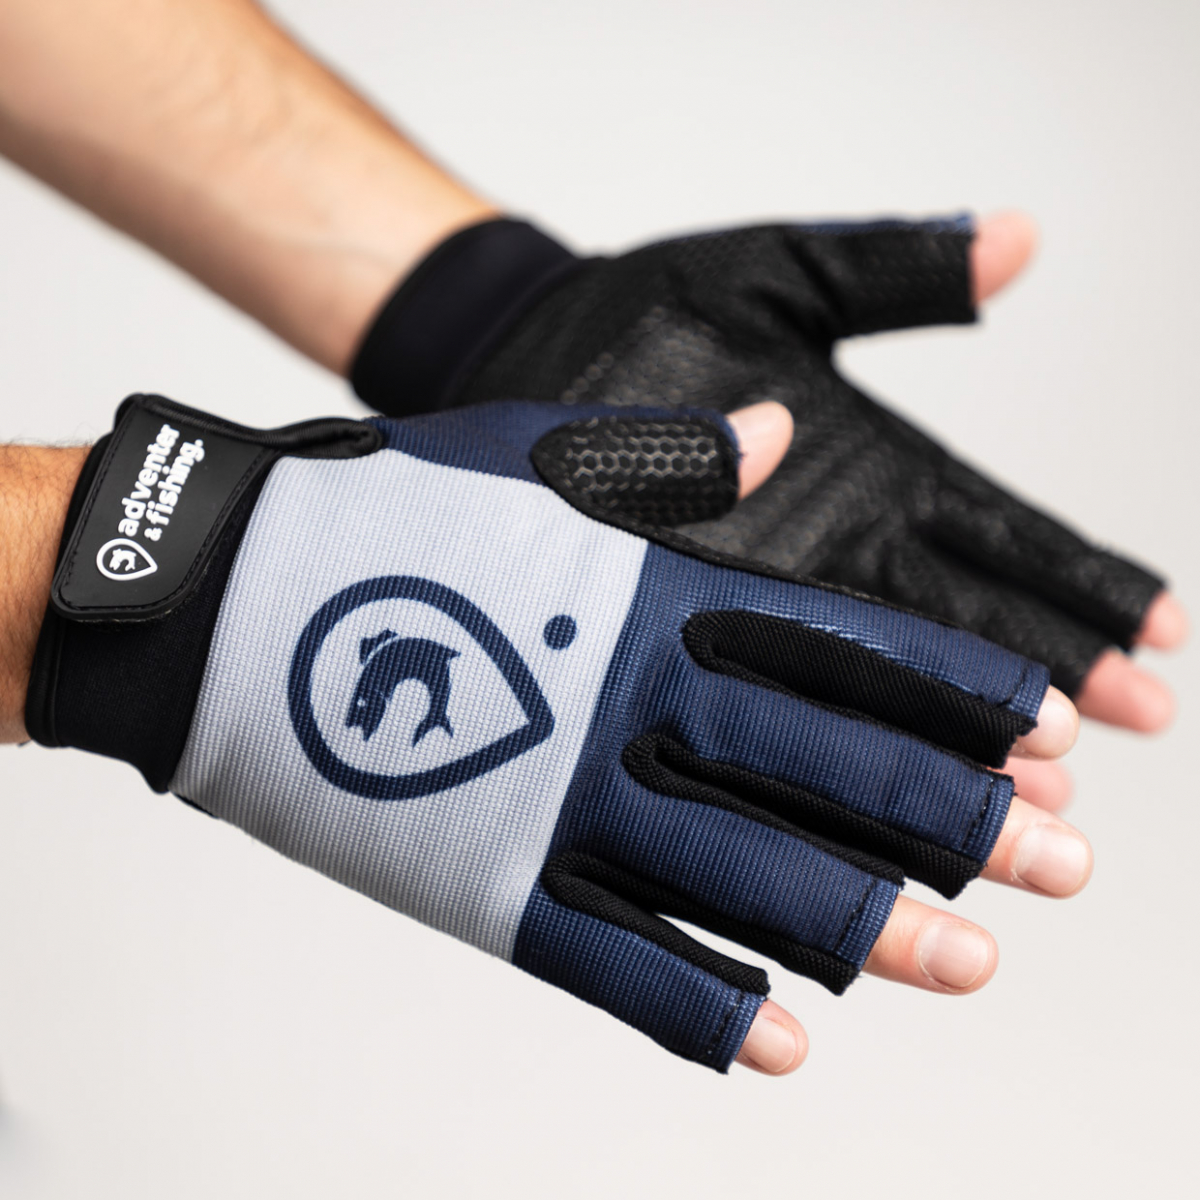 Gloves for sea fishing Bluefin Trevally short